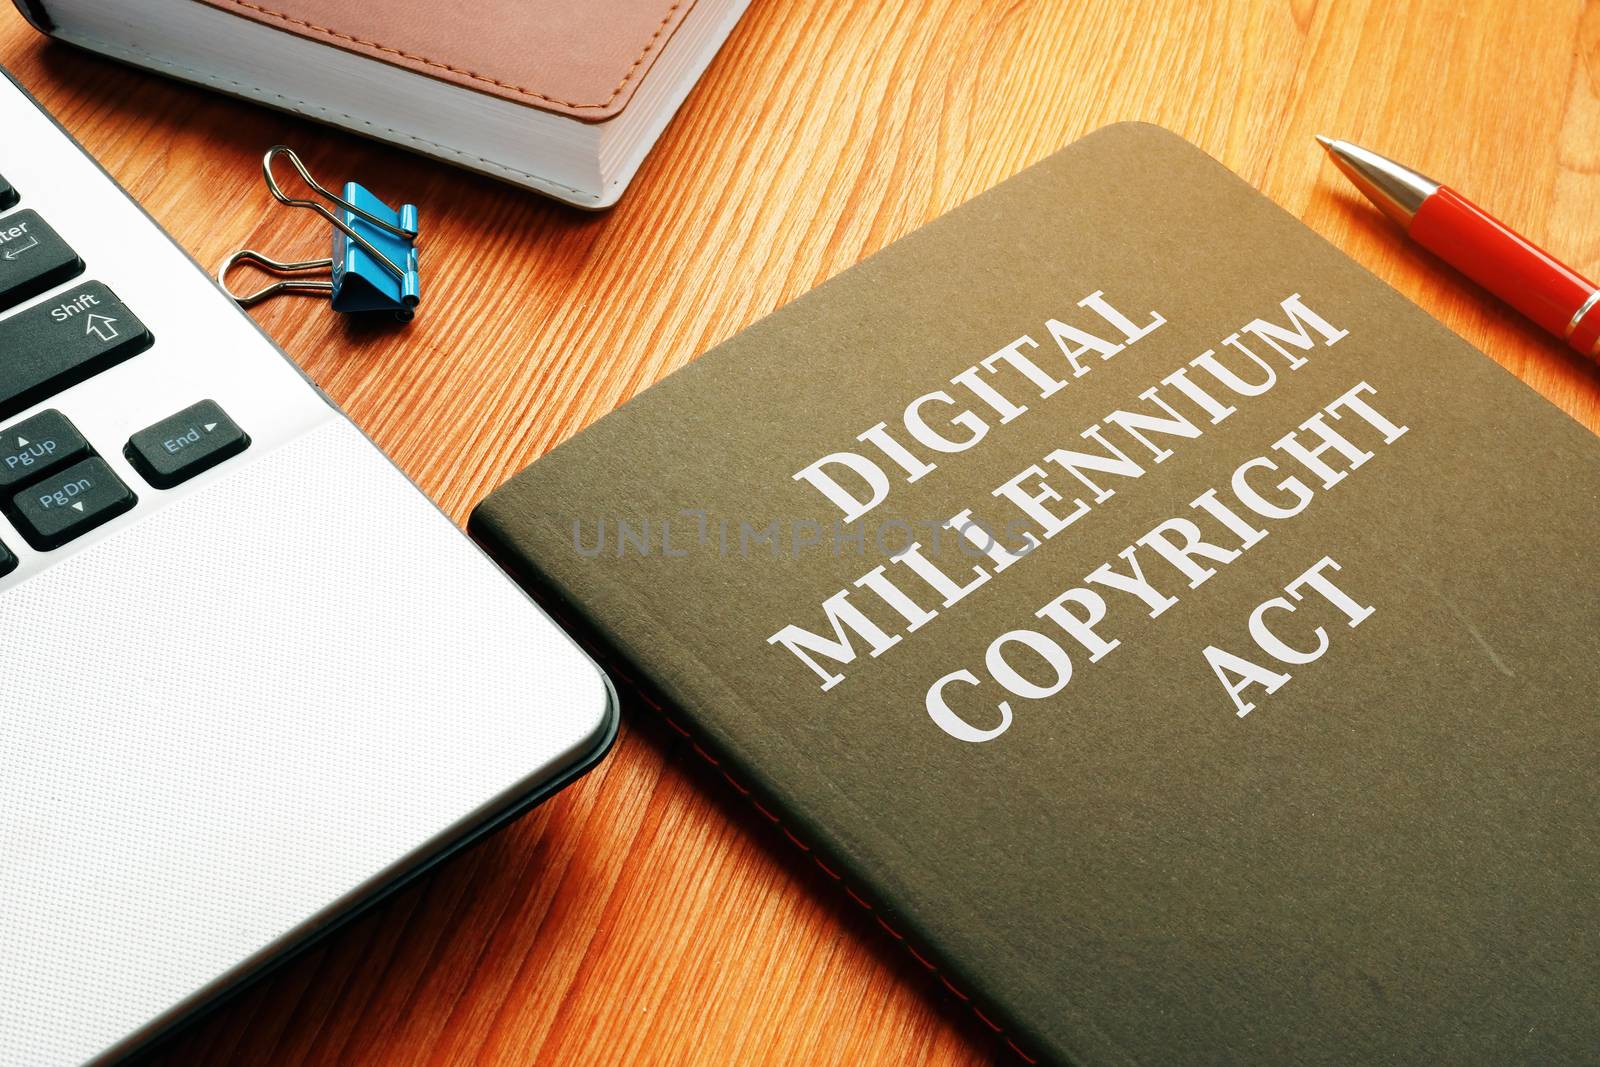 DMCA Digital Millennium Copyright Act and laptop.